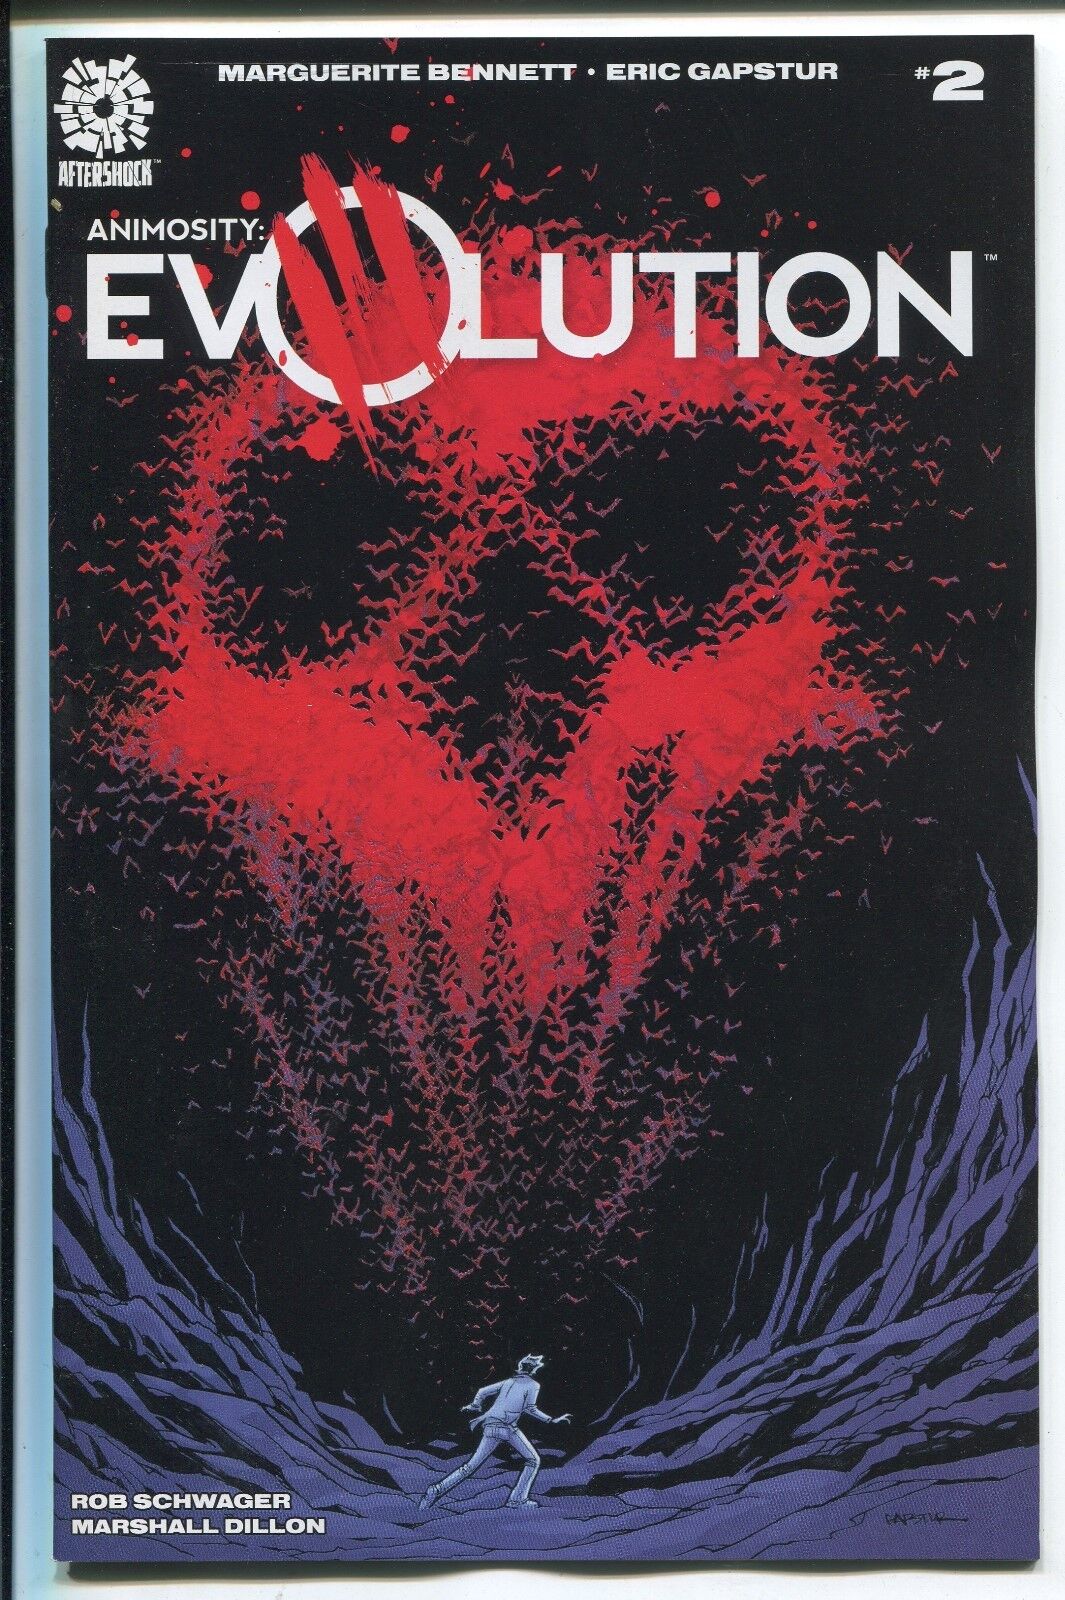 ANIMOSITY: EVOLUTION #2 - ERIC GAPSTUR ART & COVER - AFTERSHOCK COMICS/2017